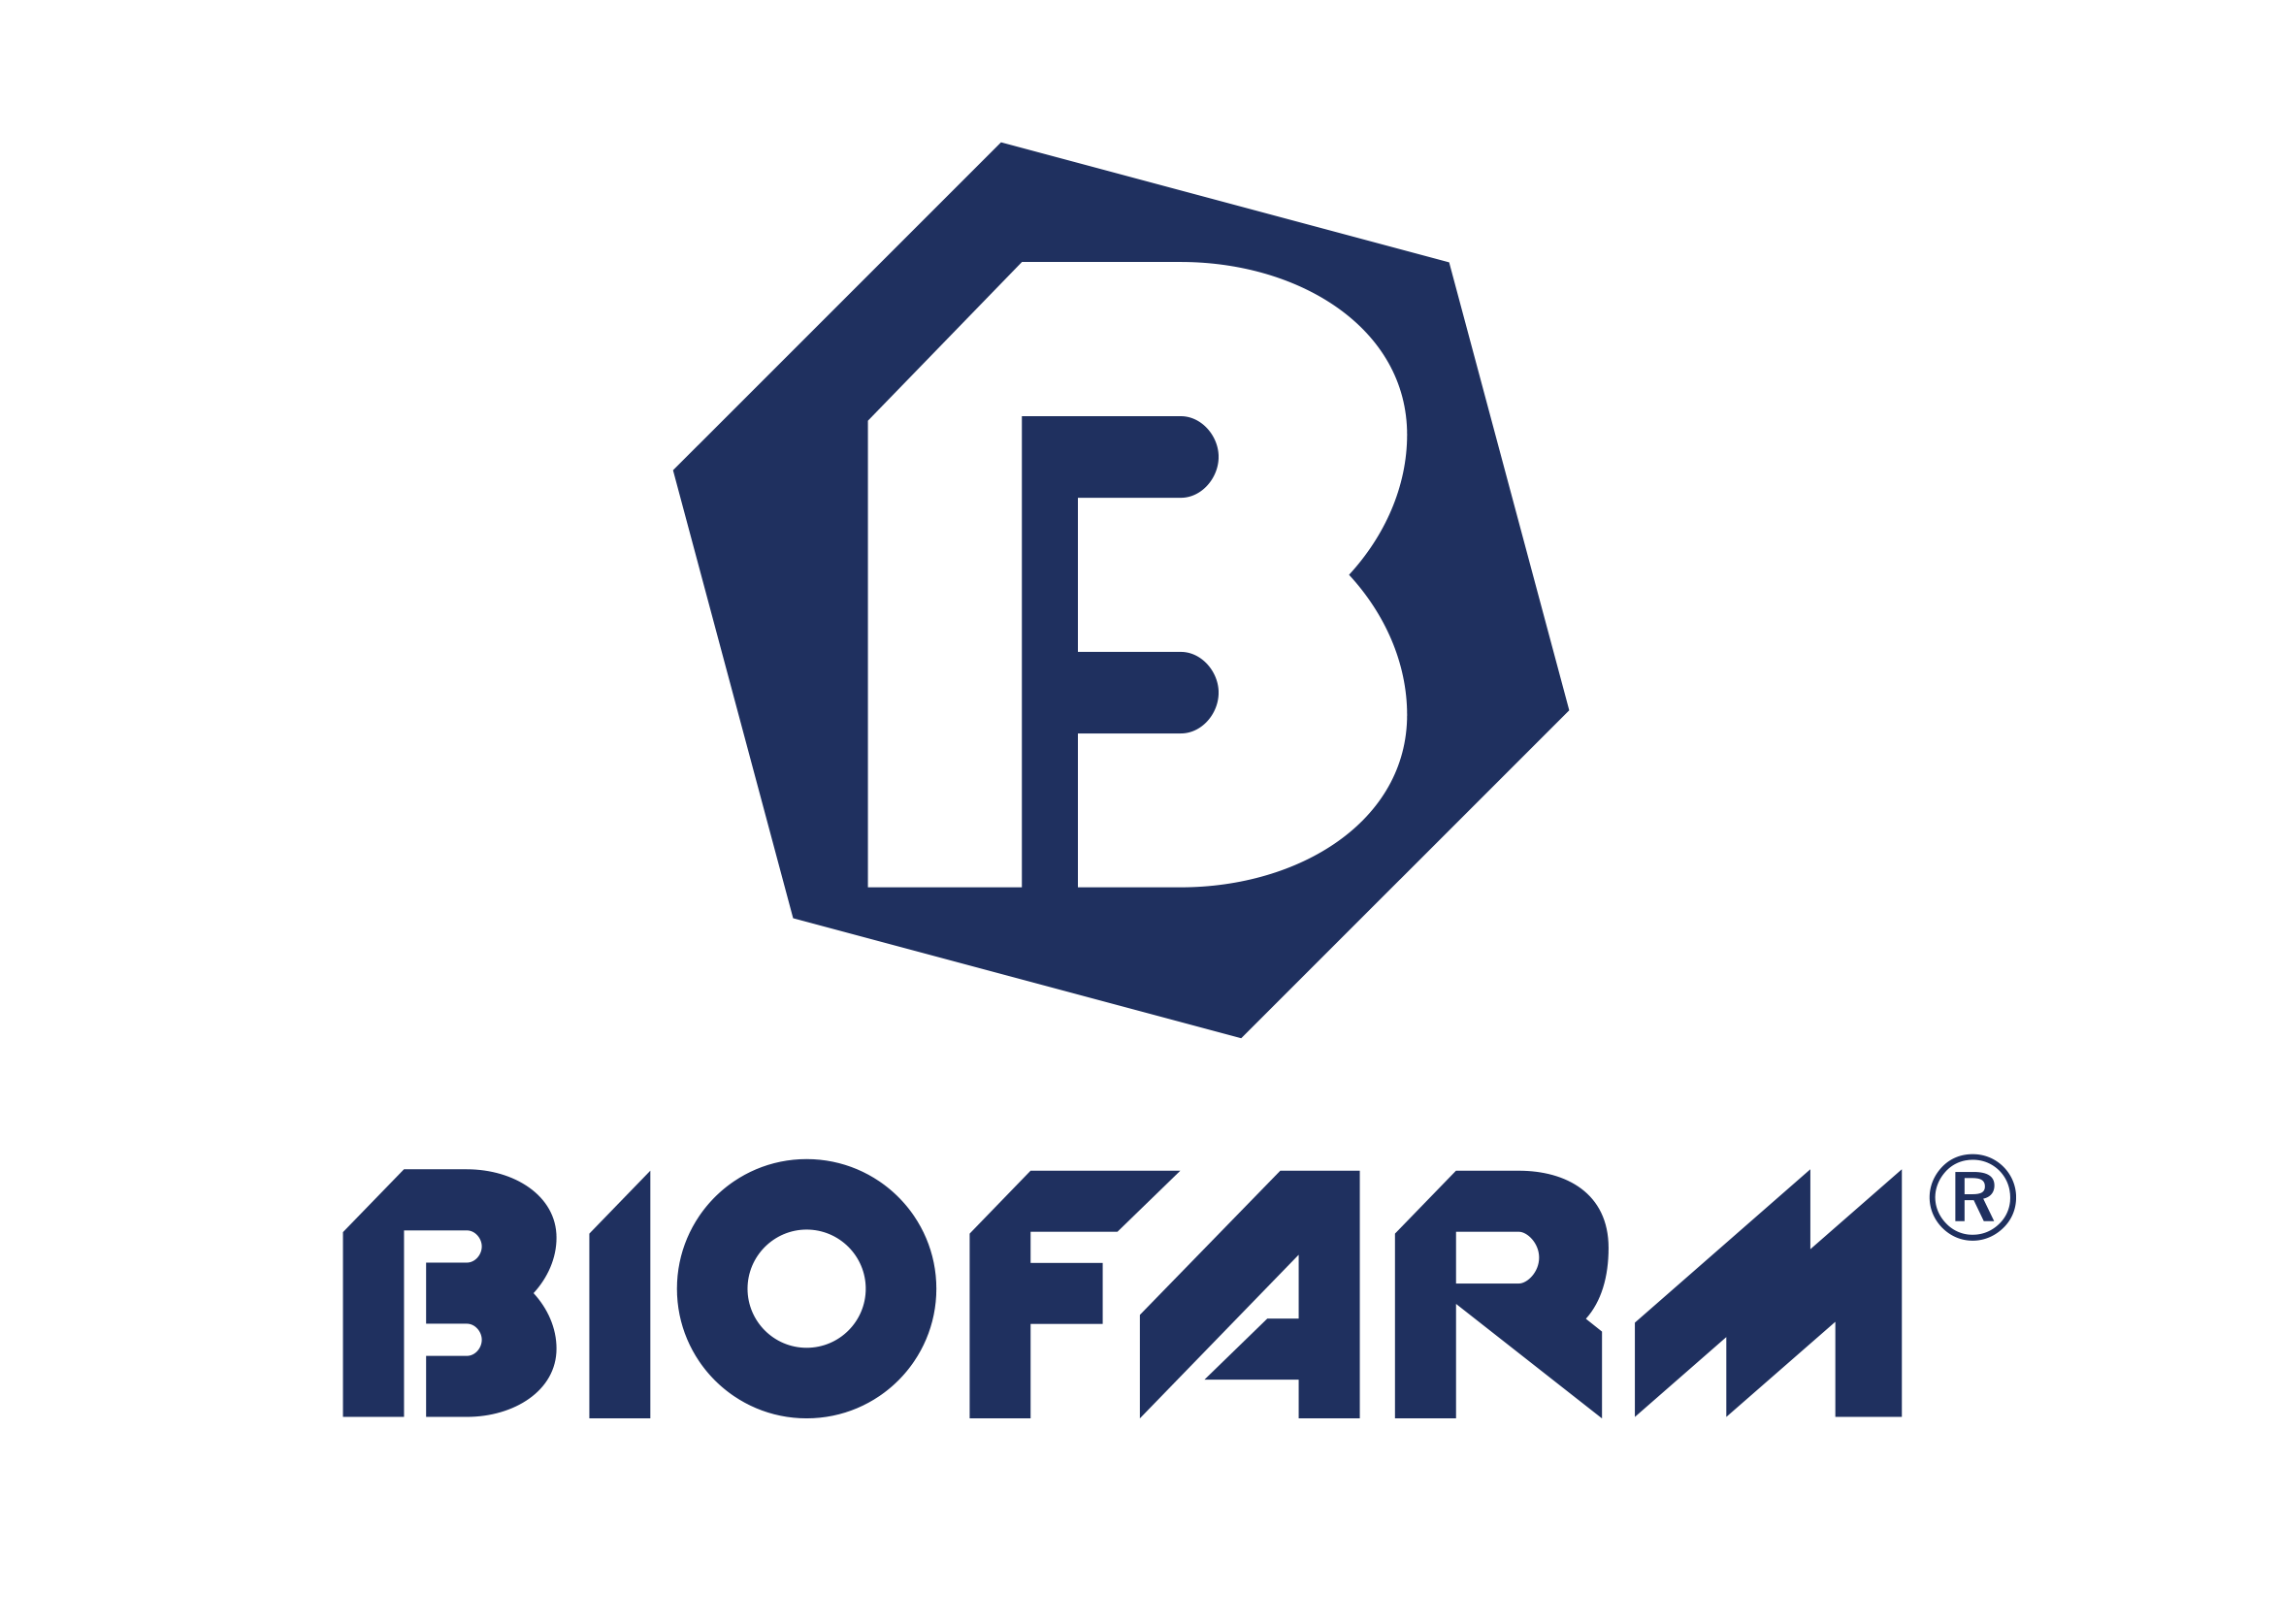 logo BIOFARM